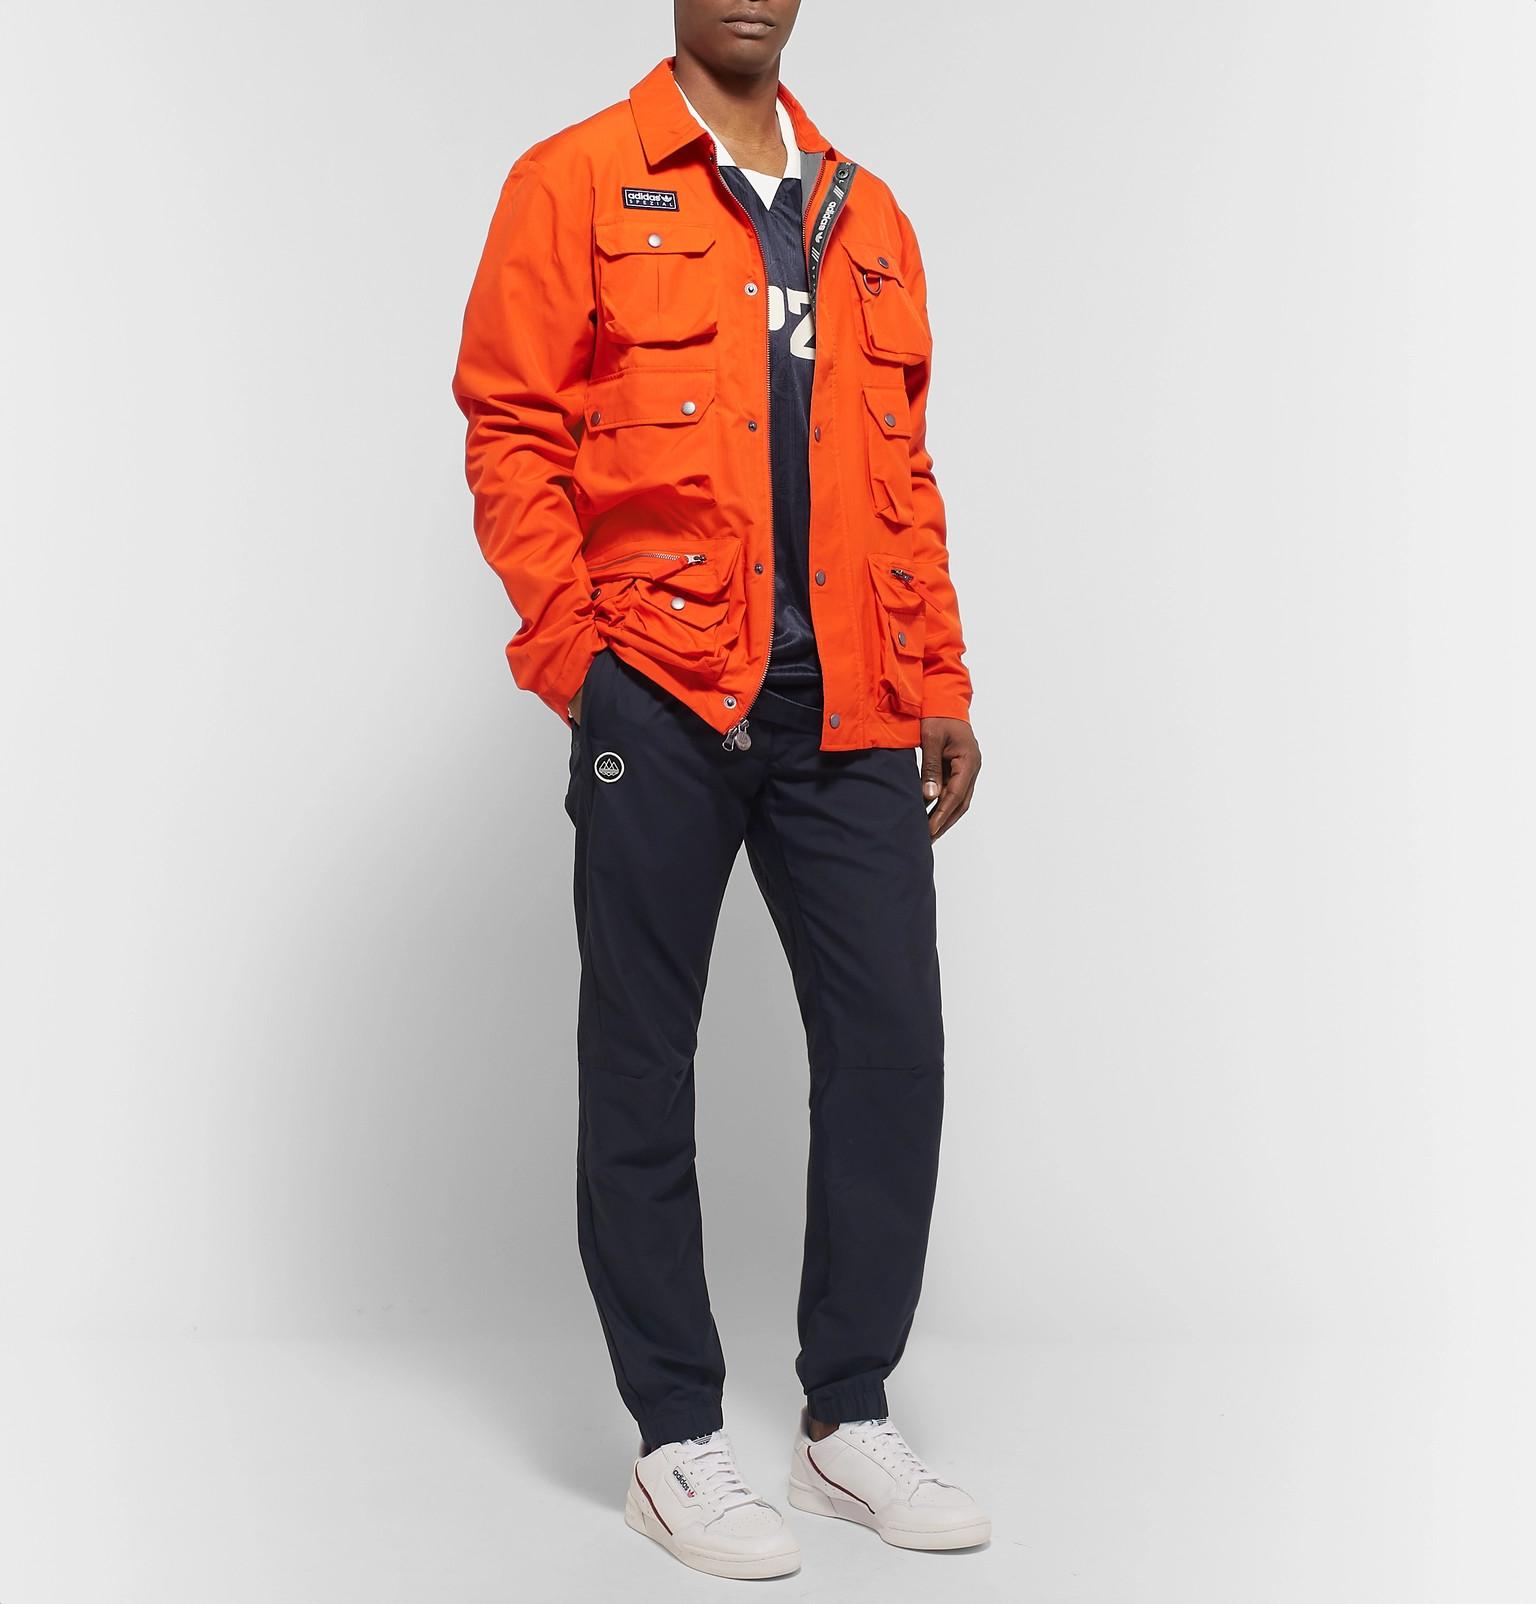 orange spezial jacket